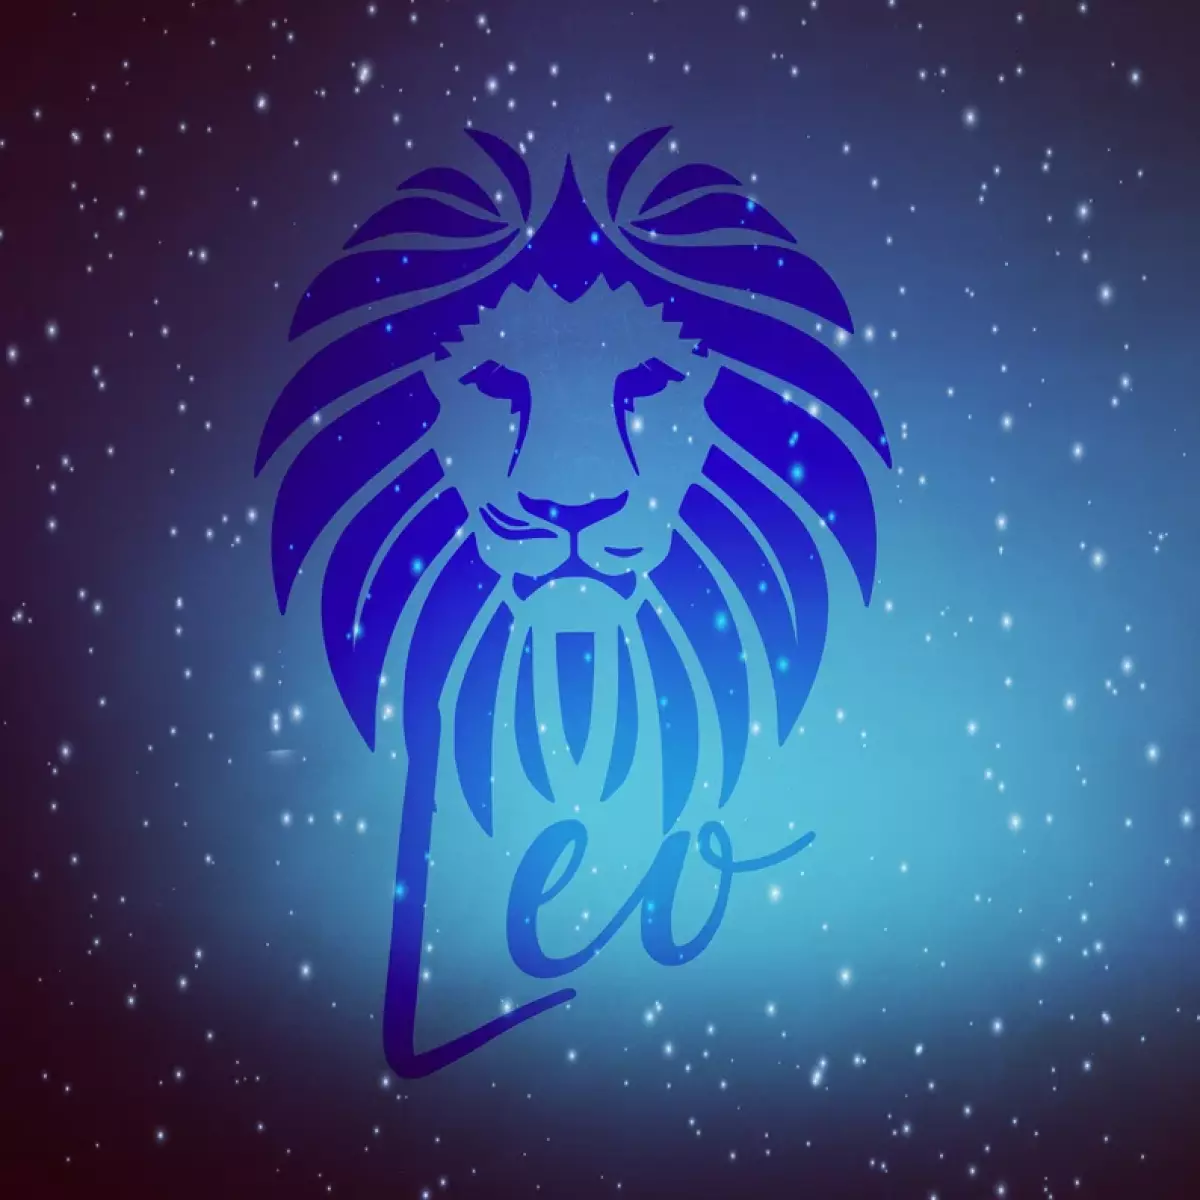 August 11th Zodiac Sign (Leo)